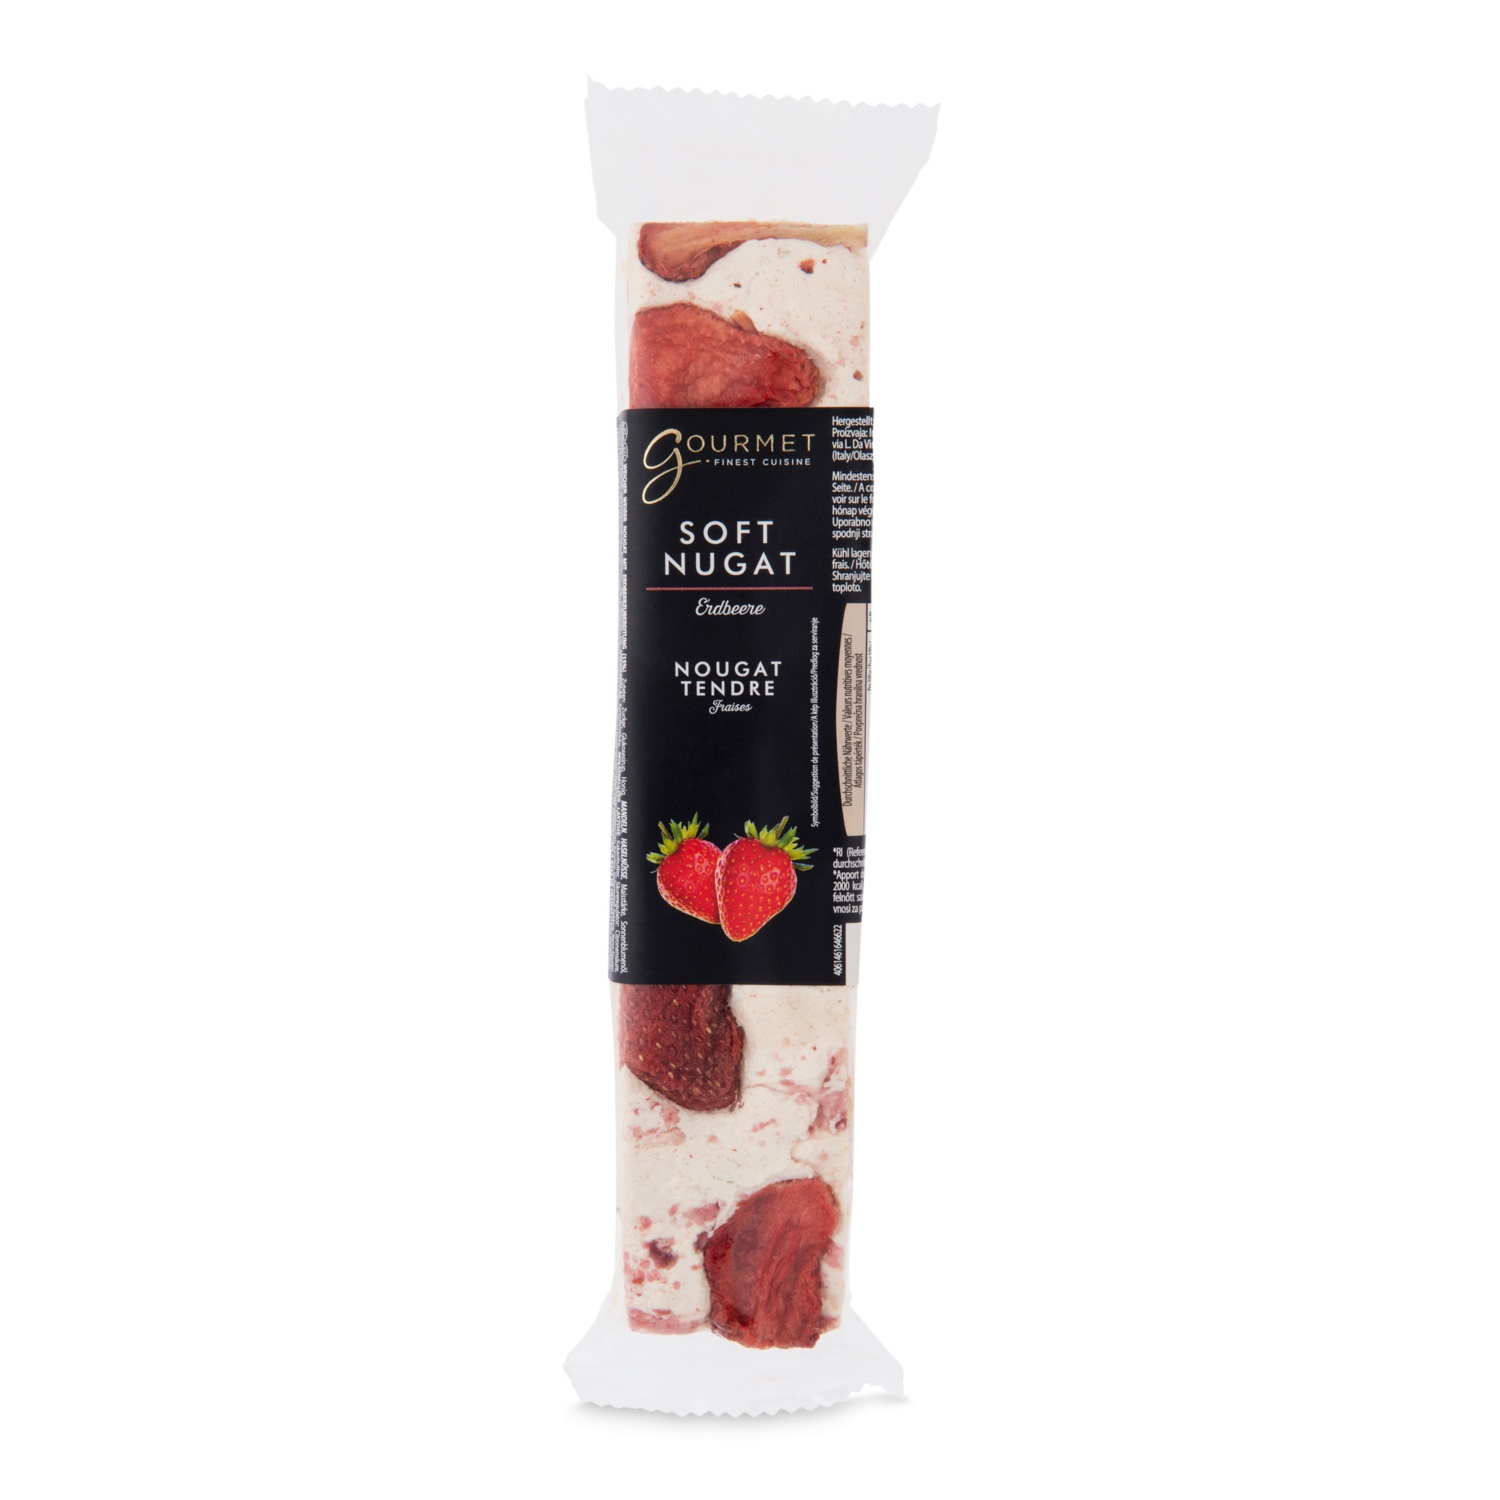 GOURMET FINEST CUISINE Italienischer Soft Nougat, Erdbeere